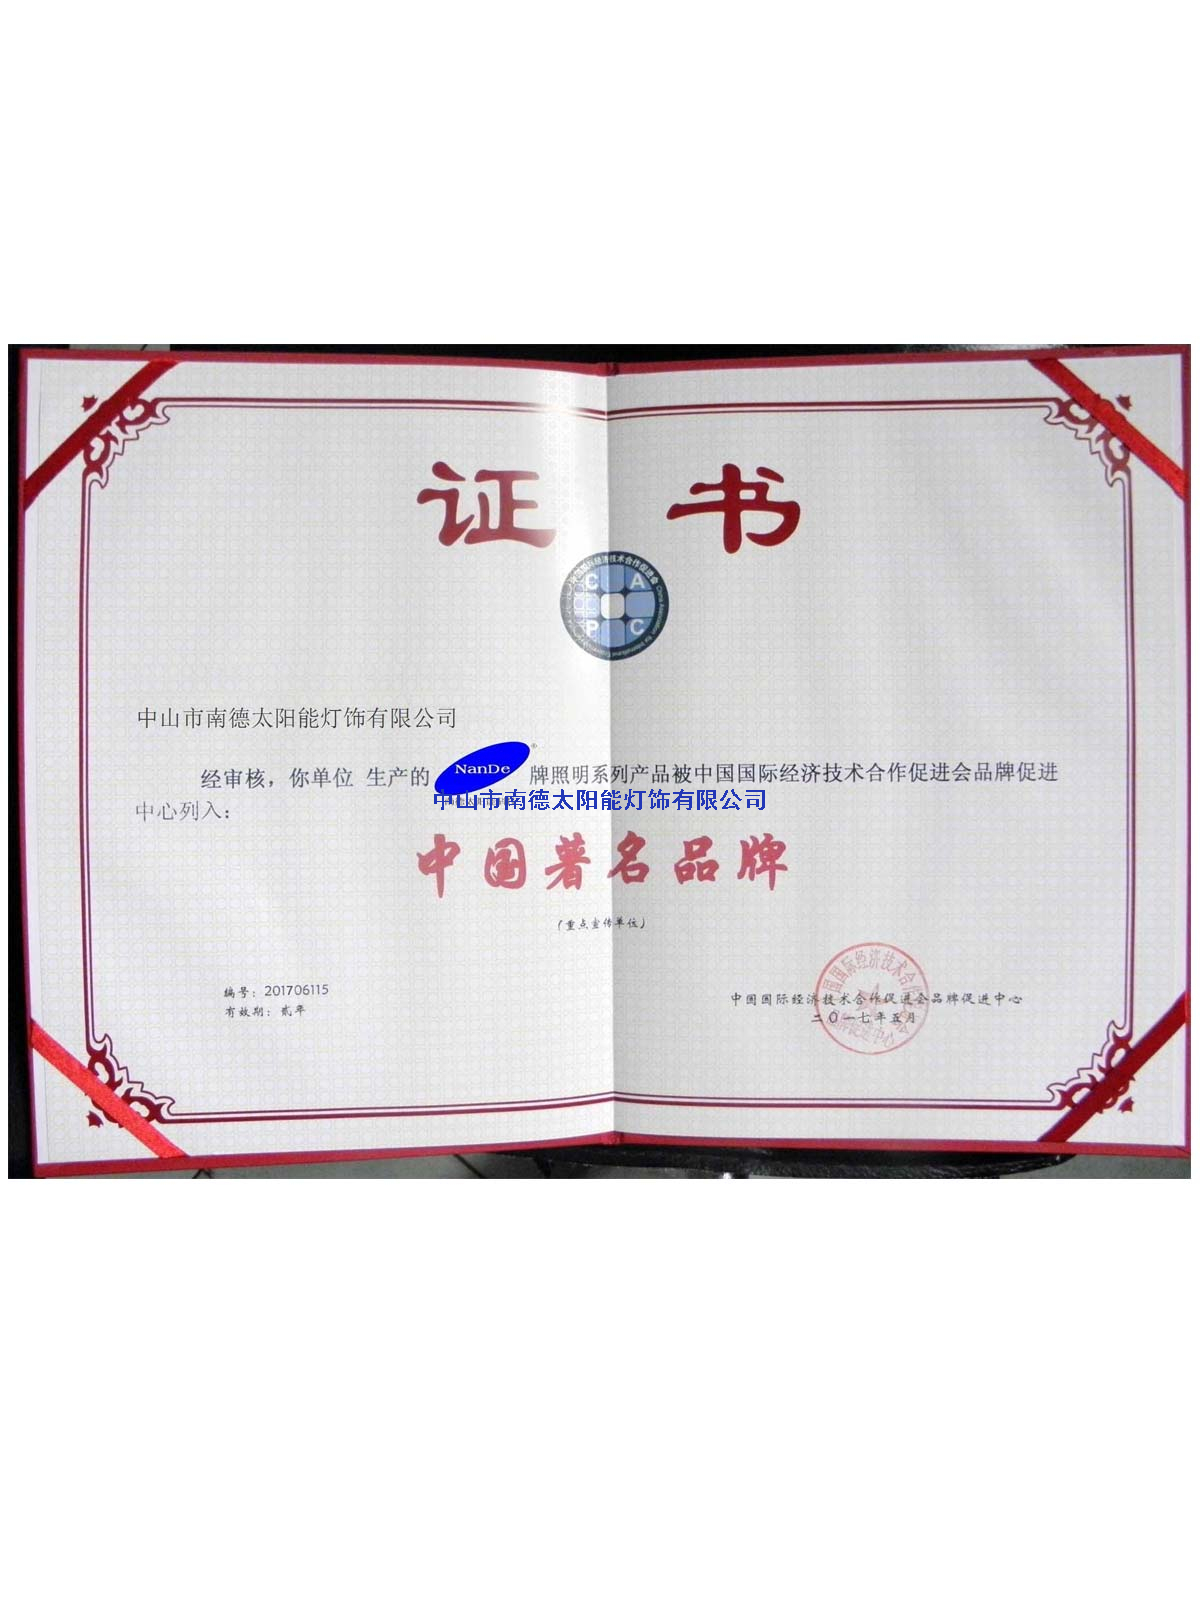 j9九游会真人游戏第一品牌著名品牌证书